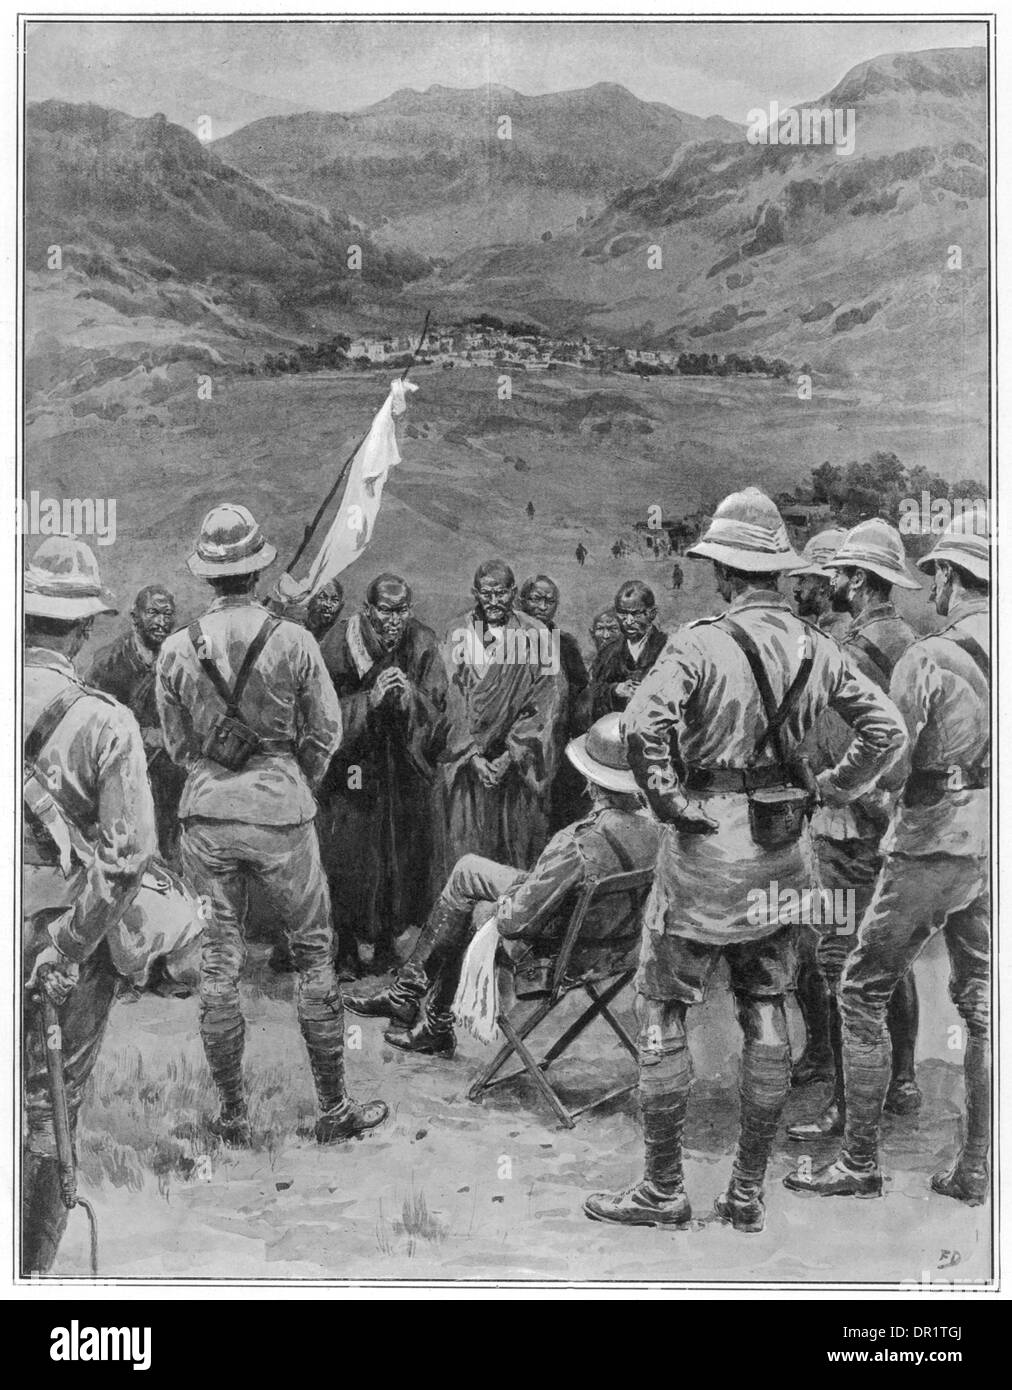 TIBET EXPEDITION/1904 Stock Photo